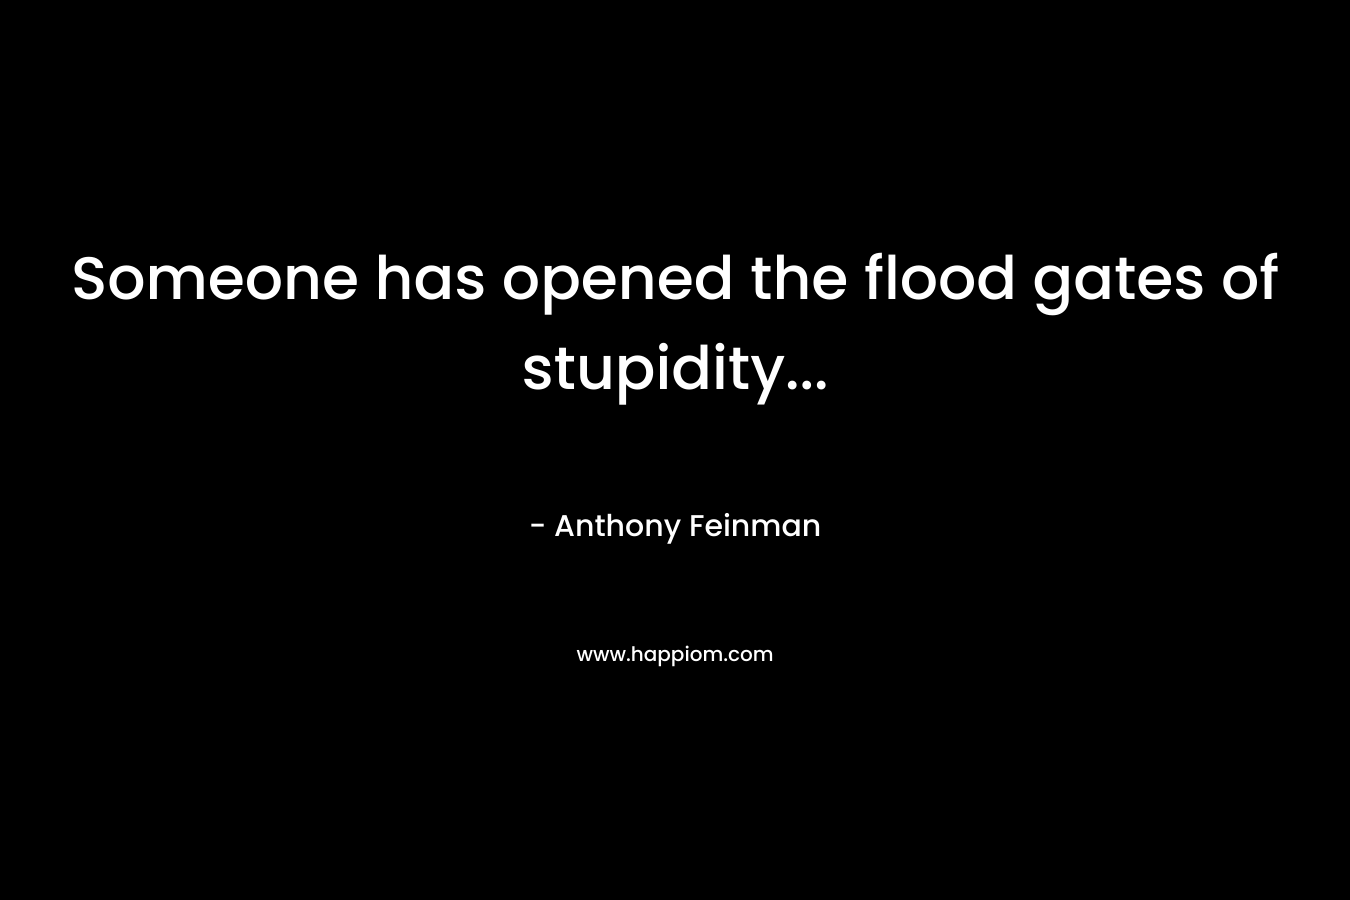 Someone has opened the flood gates of stupidity...